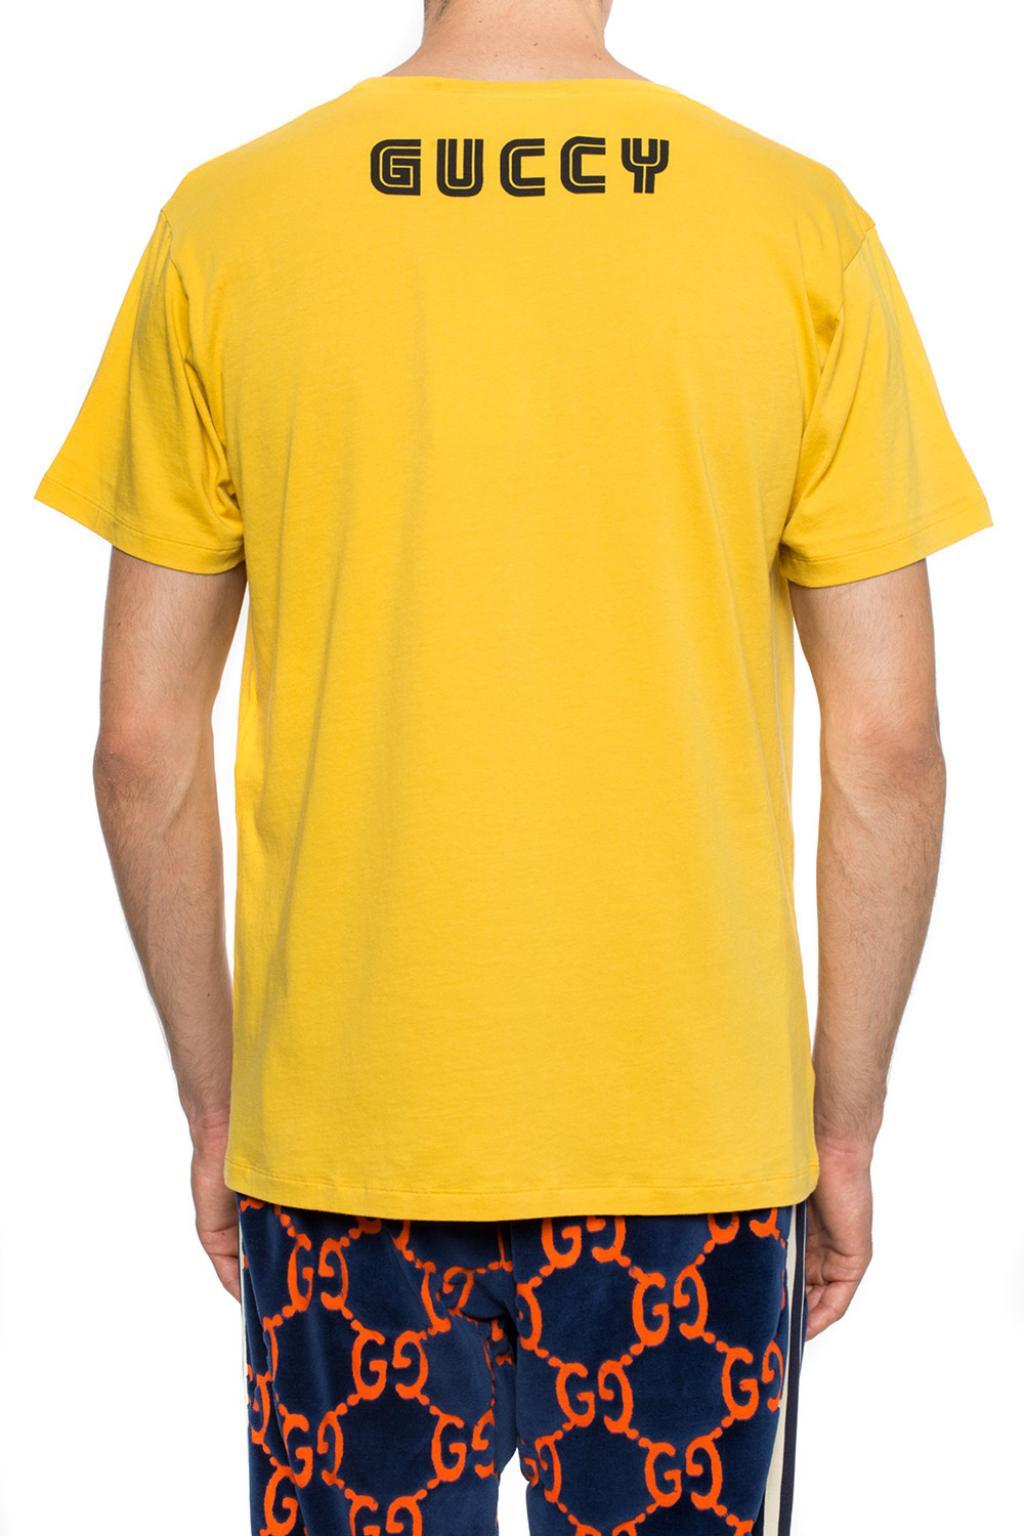 Gucci Elton John Print T-shirt in Yellow & Orange (Yellow) for Men - Lyst